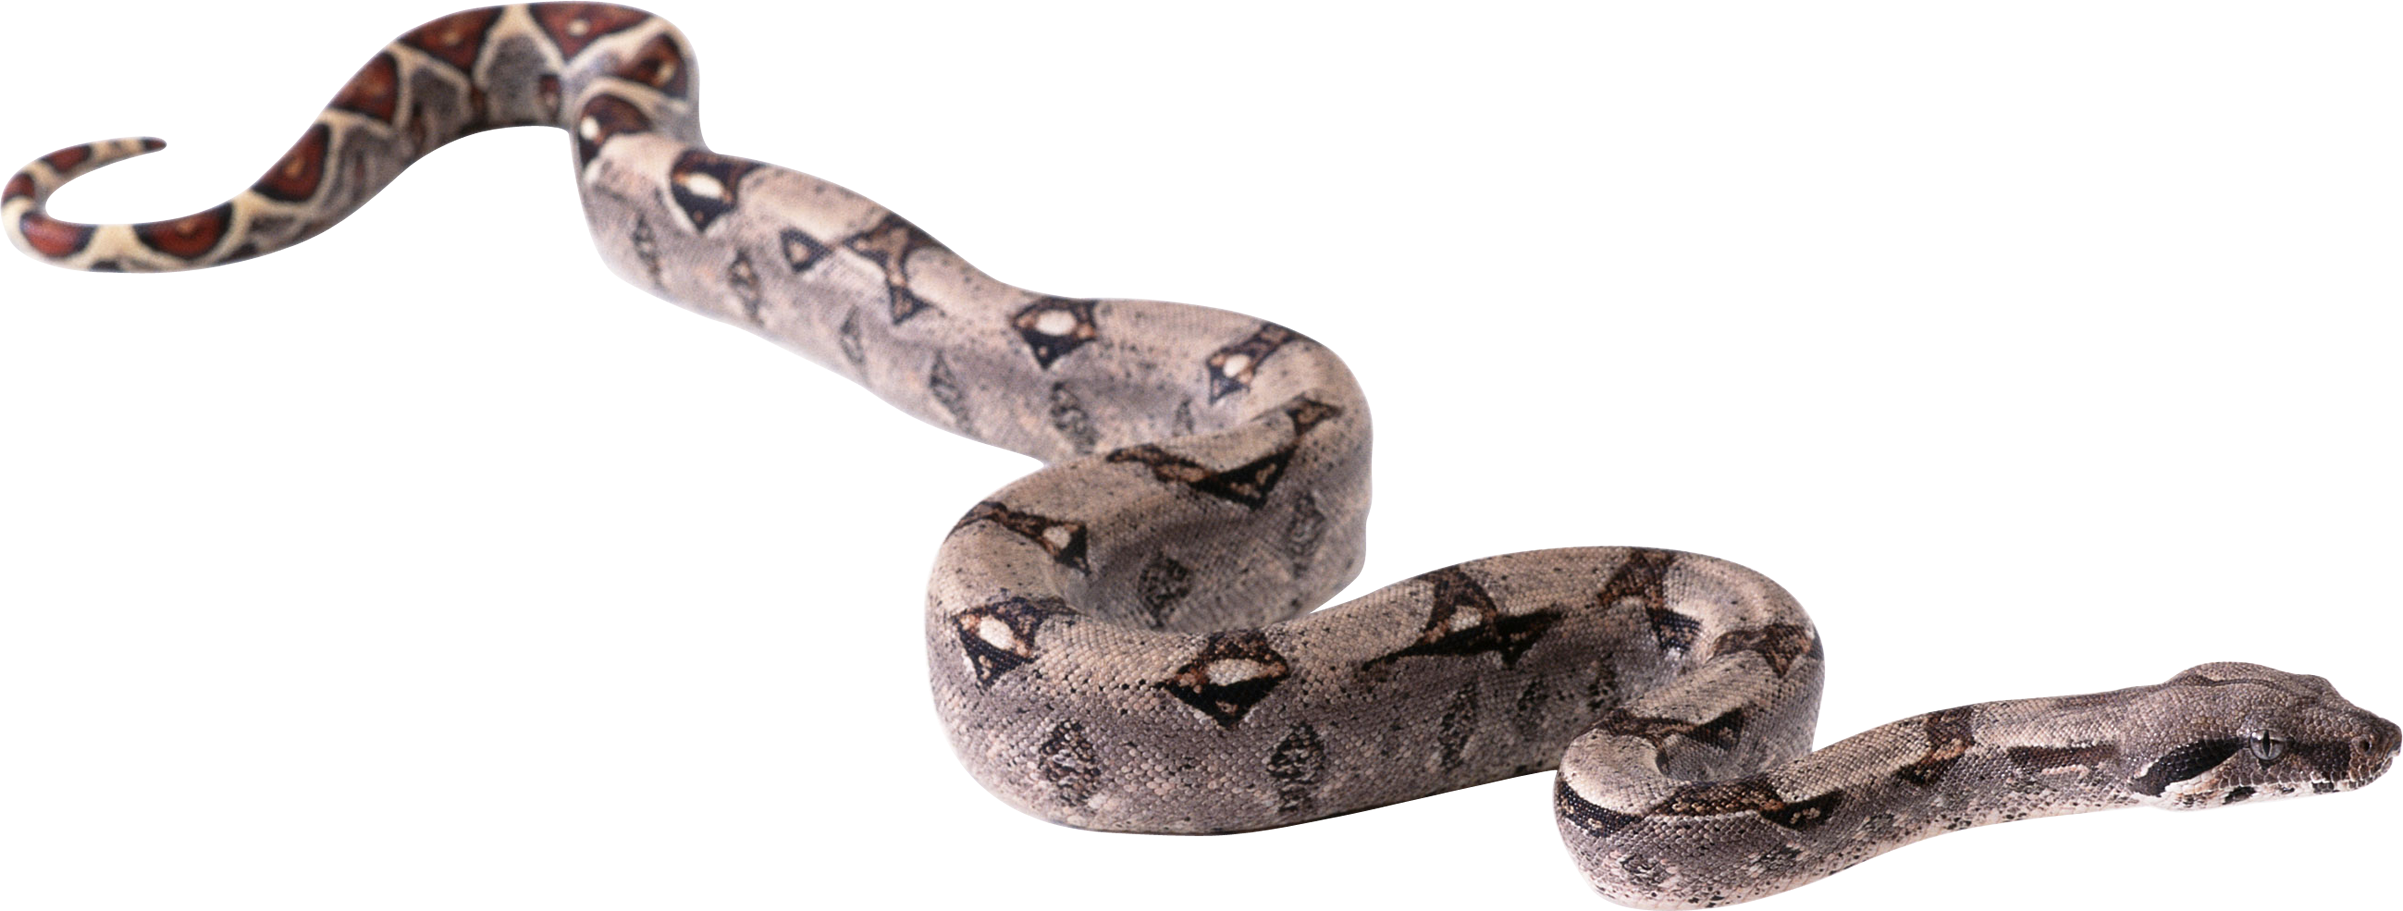 Snake Png Image Picture Download Free   Python Snake Png - Snake, Transparent background PNG HD thumbnail